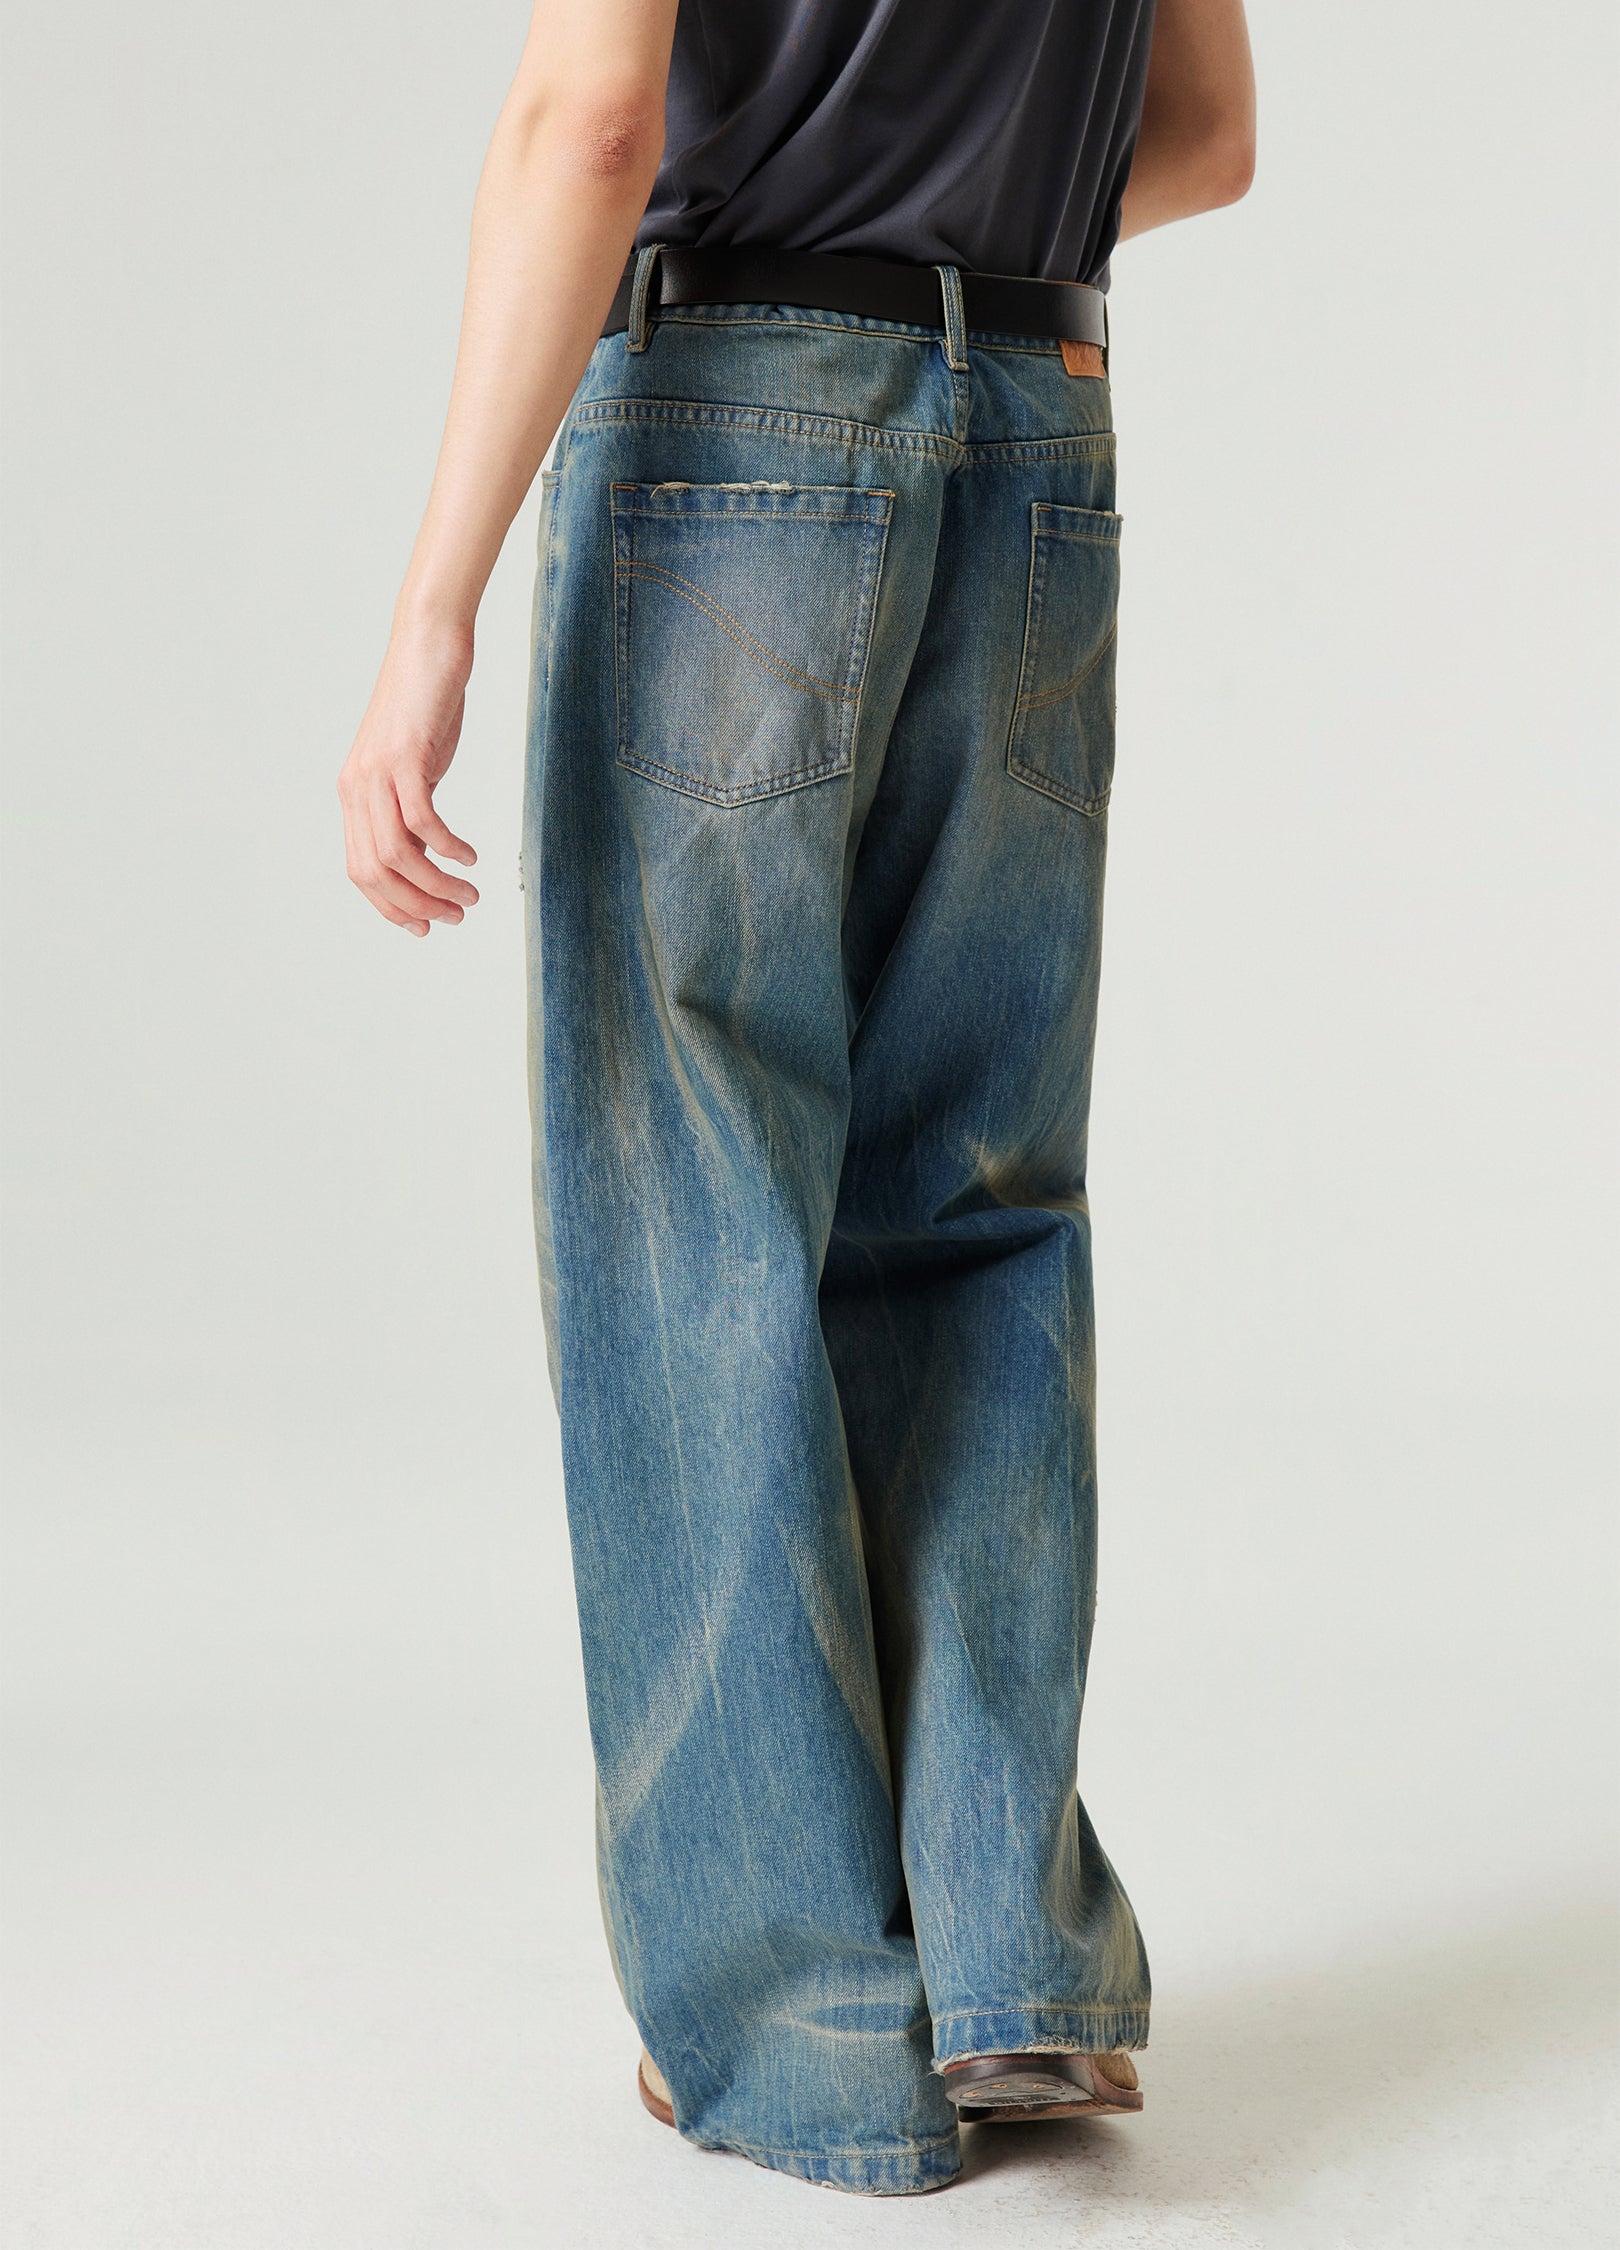 Aggregate more than 161 gucci designer jeans super hot